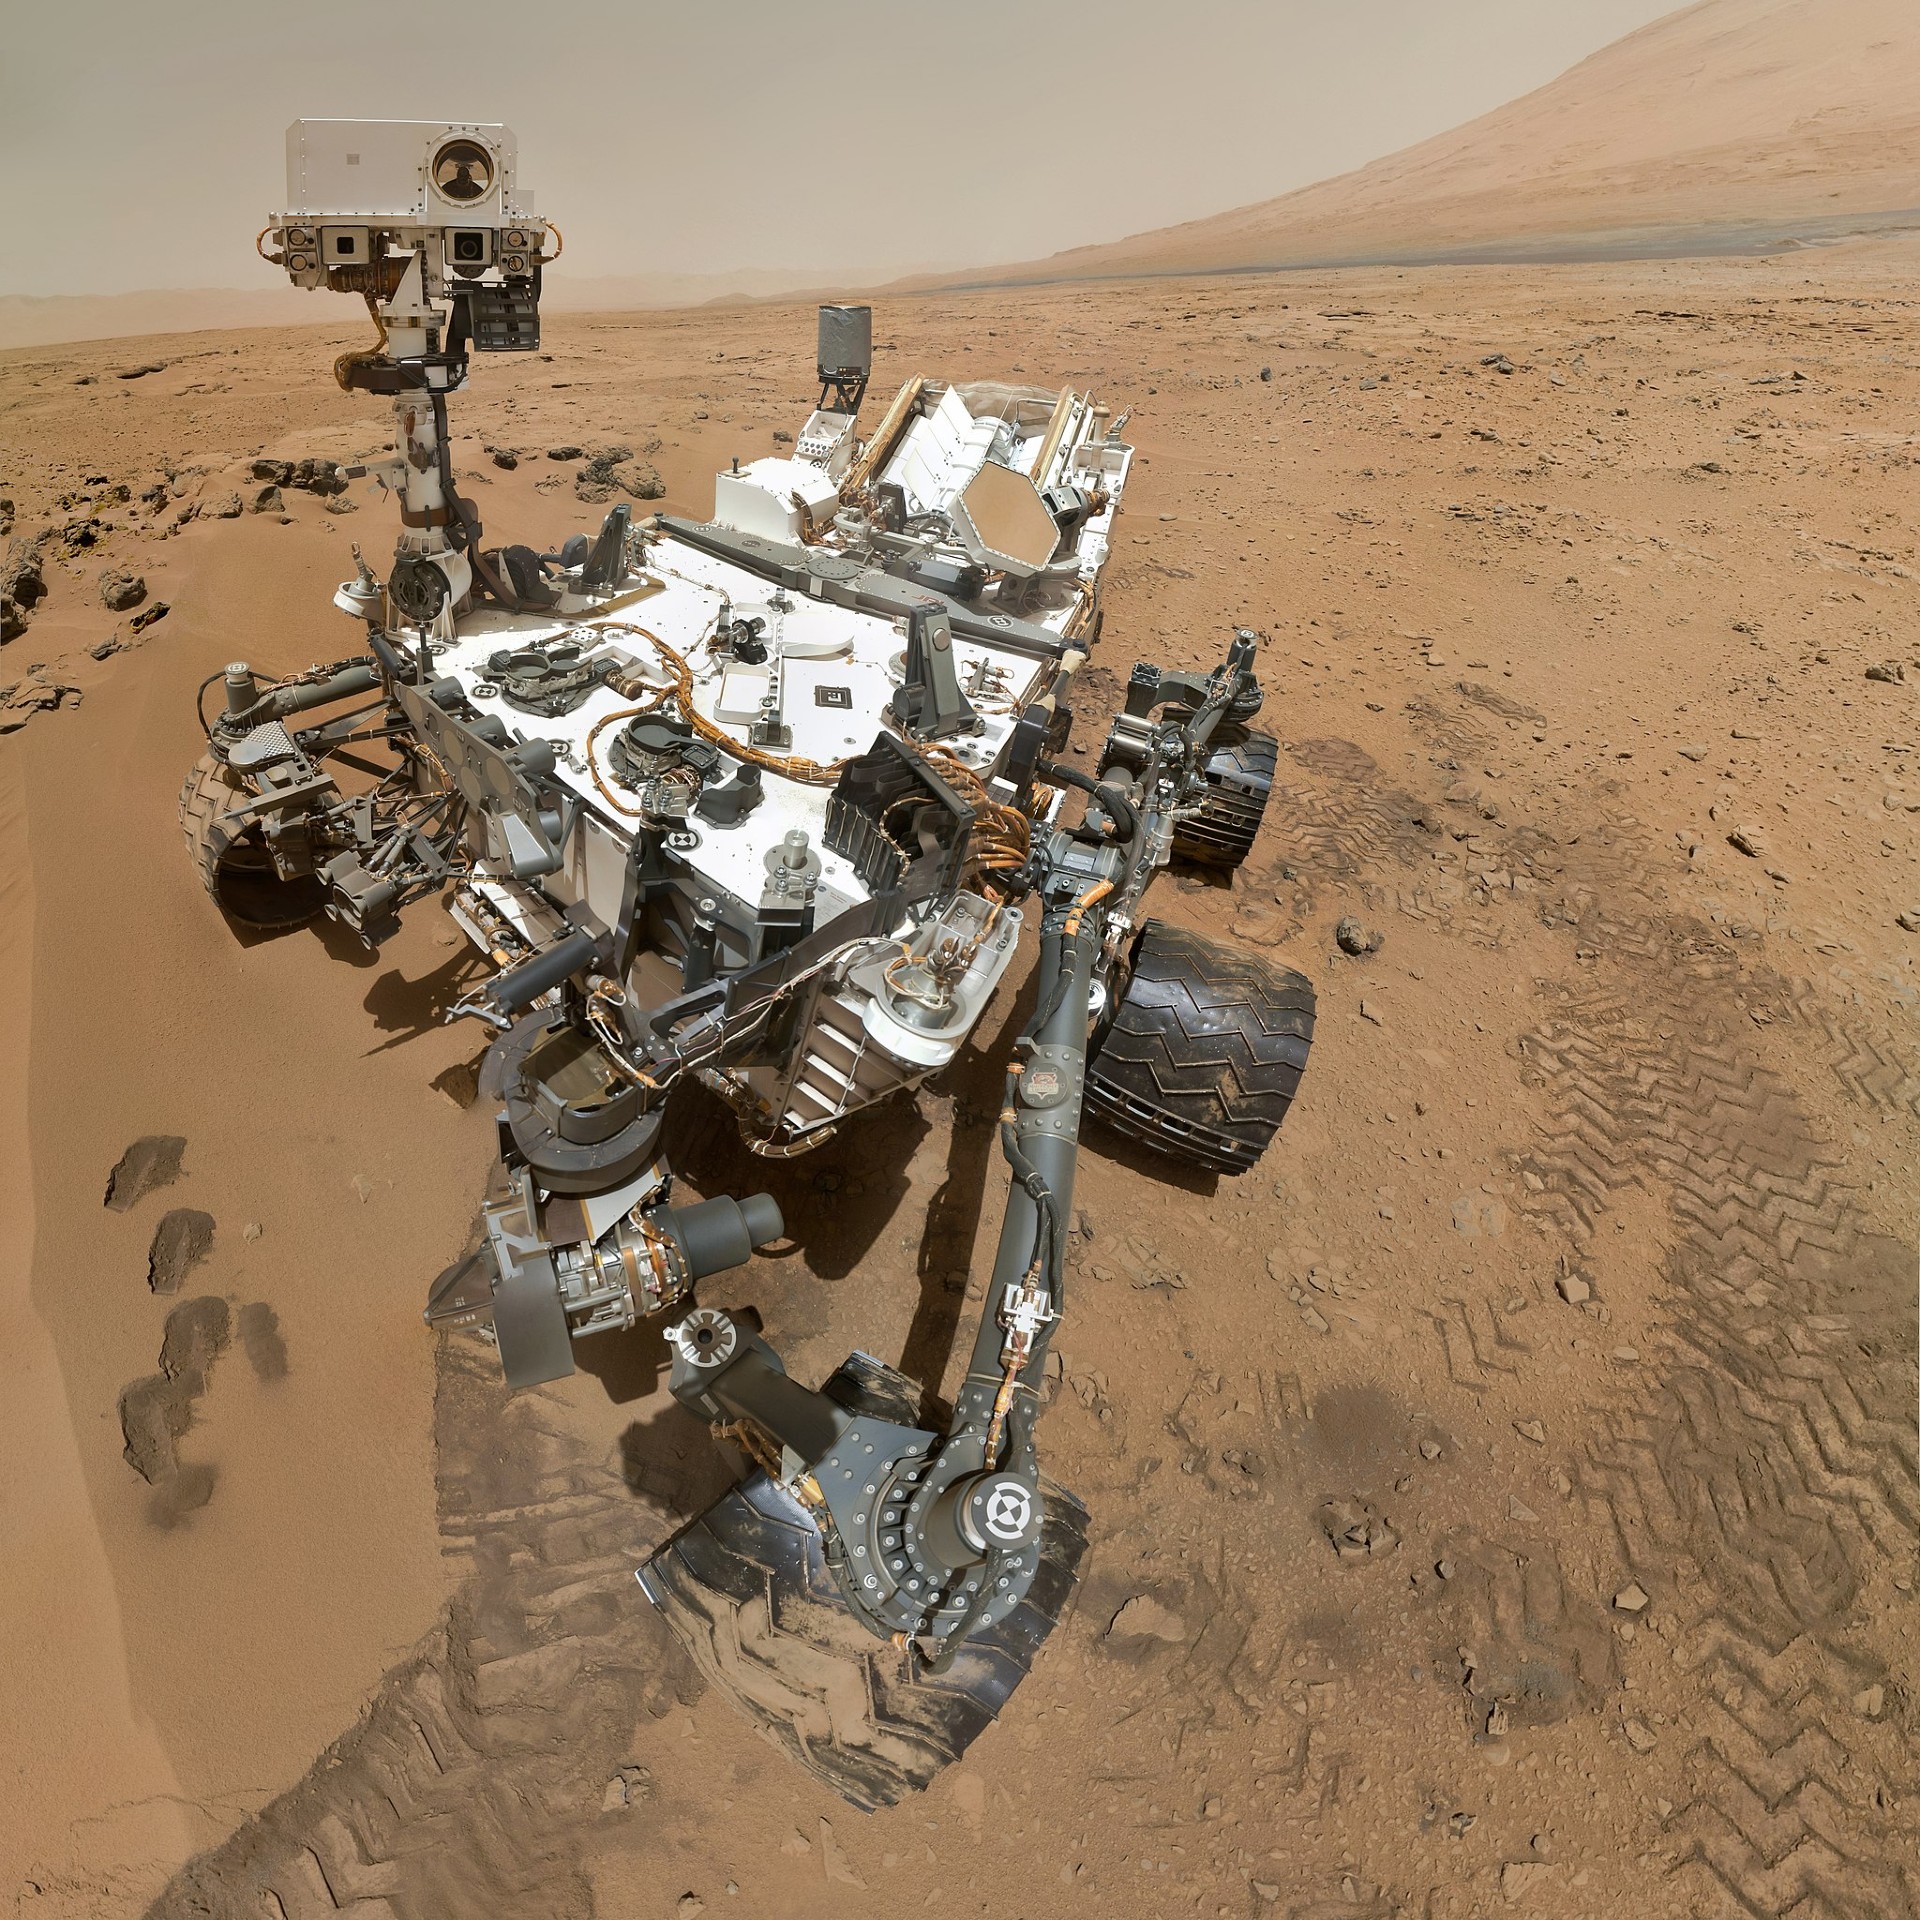 curiosity rover, planetary rover, mars rover